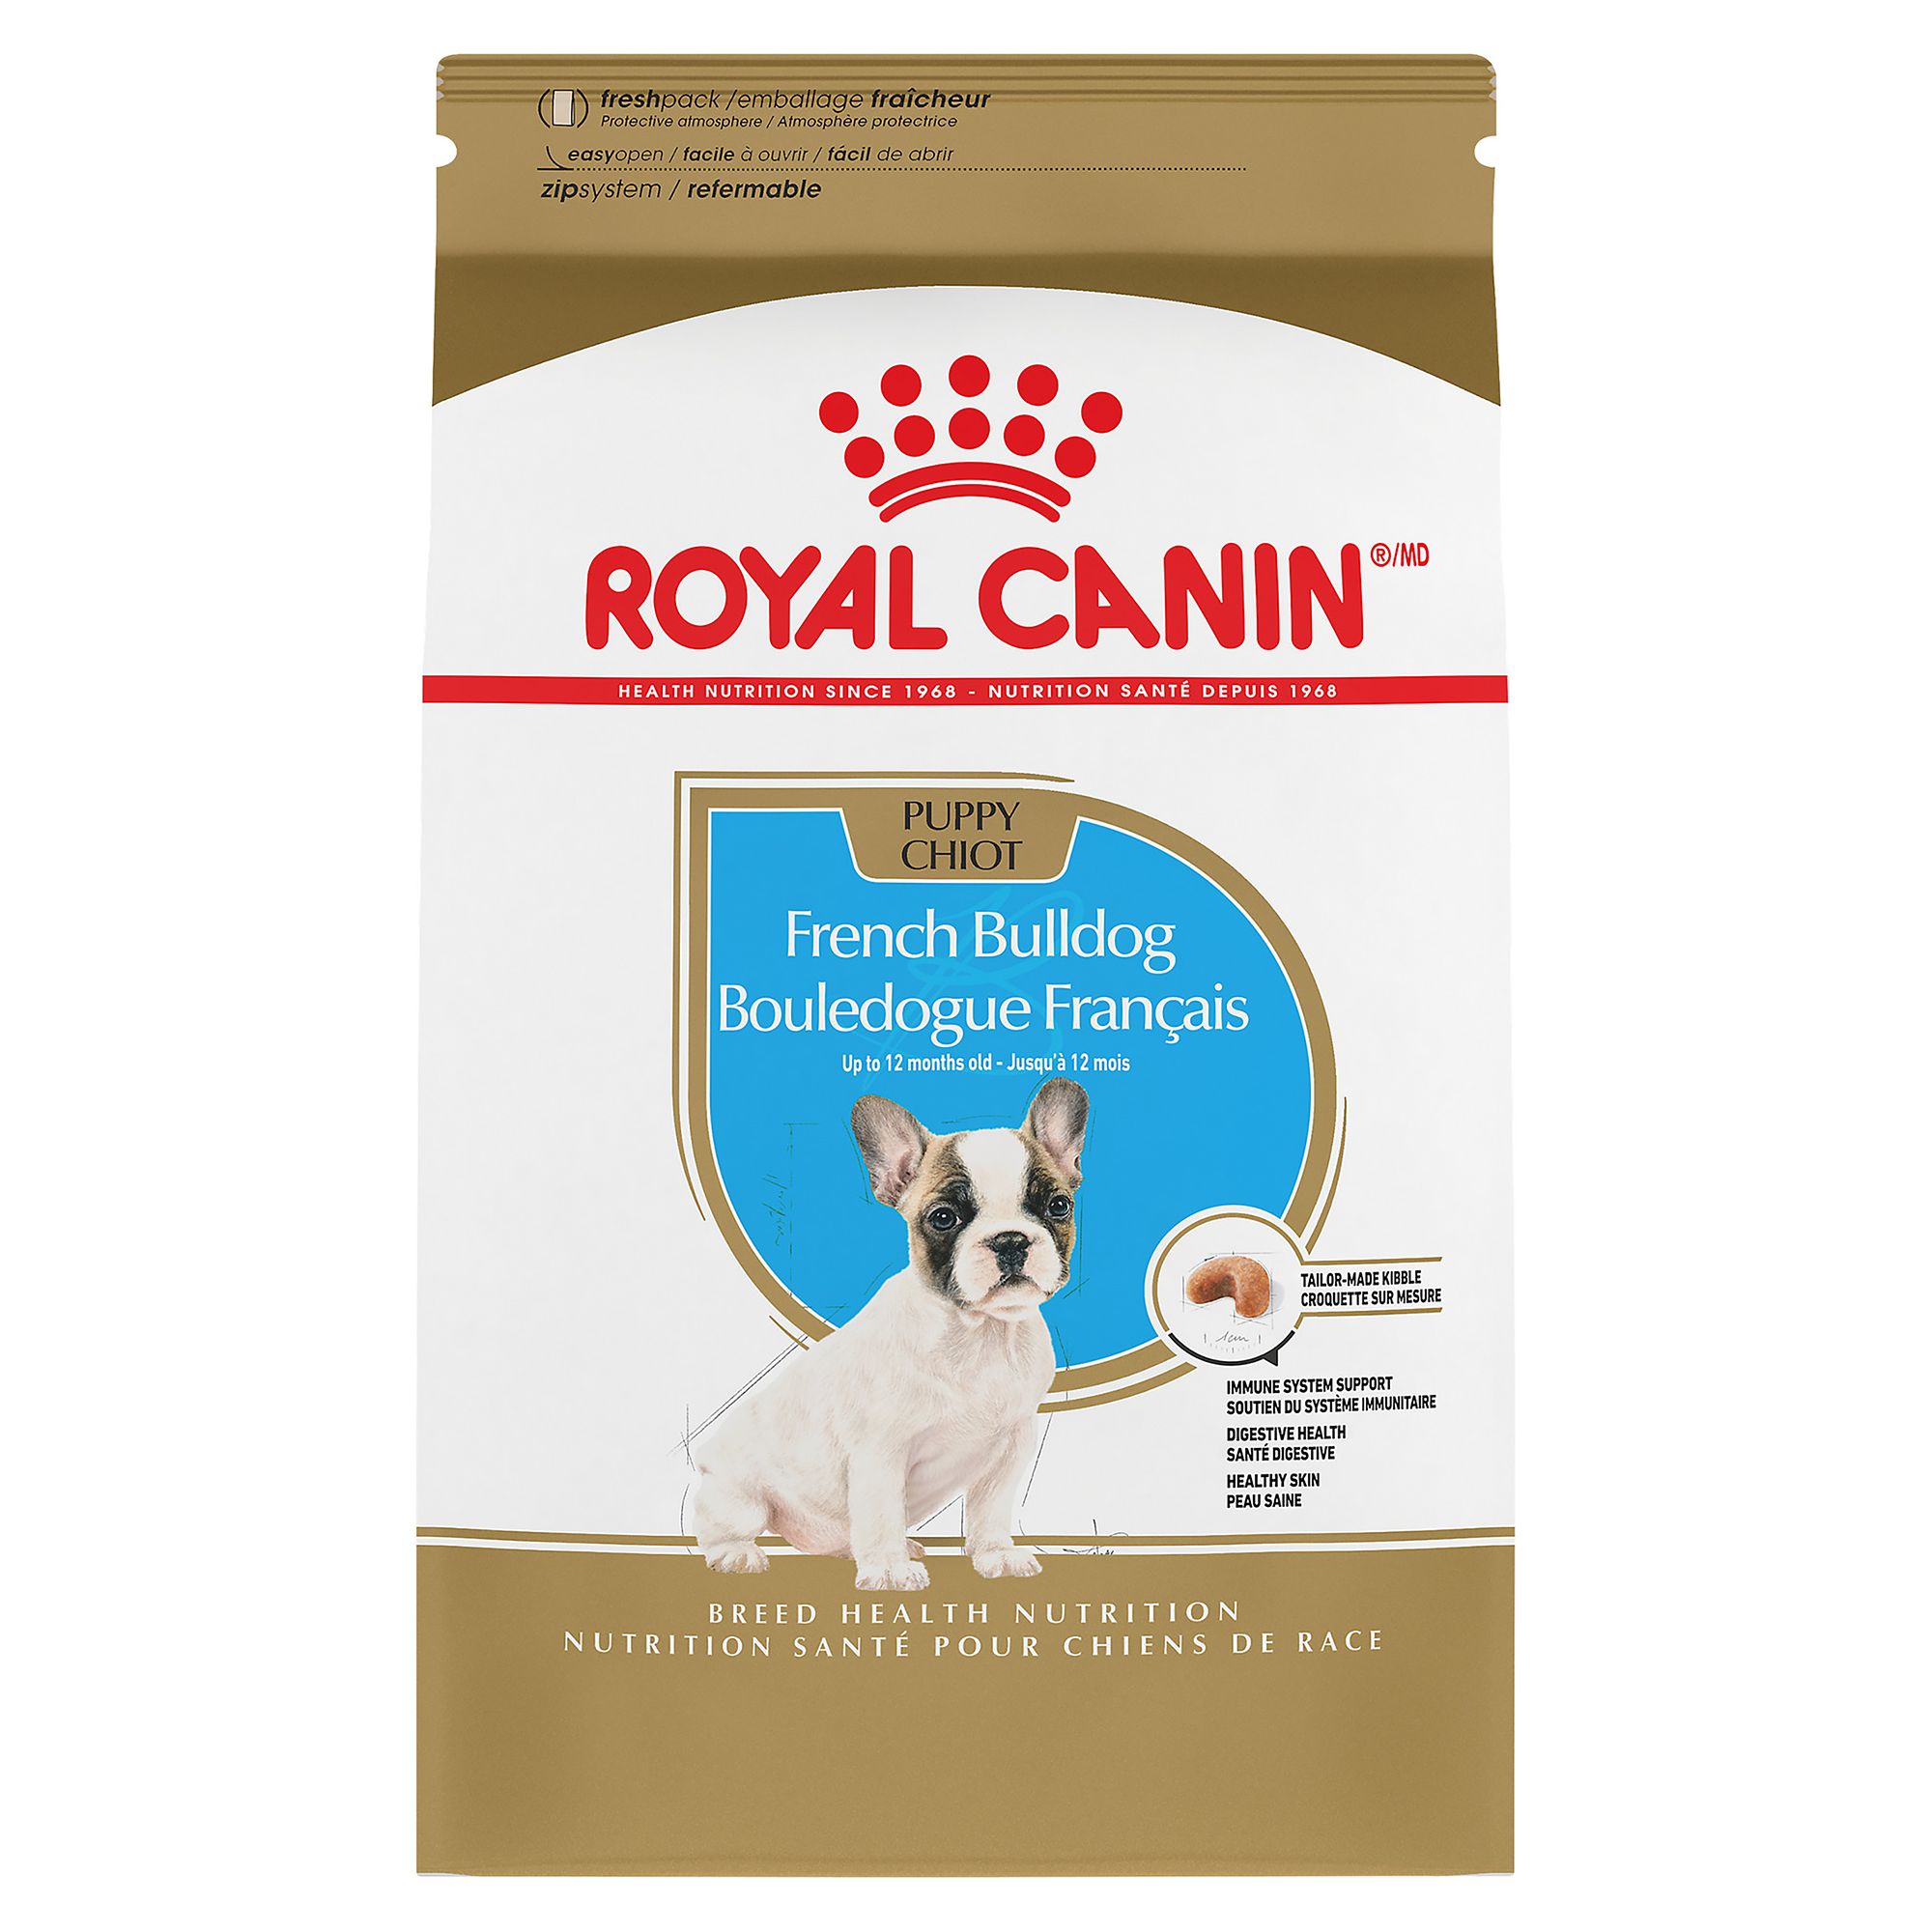 royal canin french bulldog ingredients